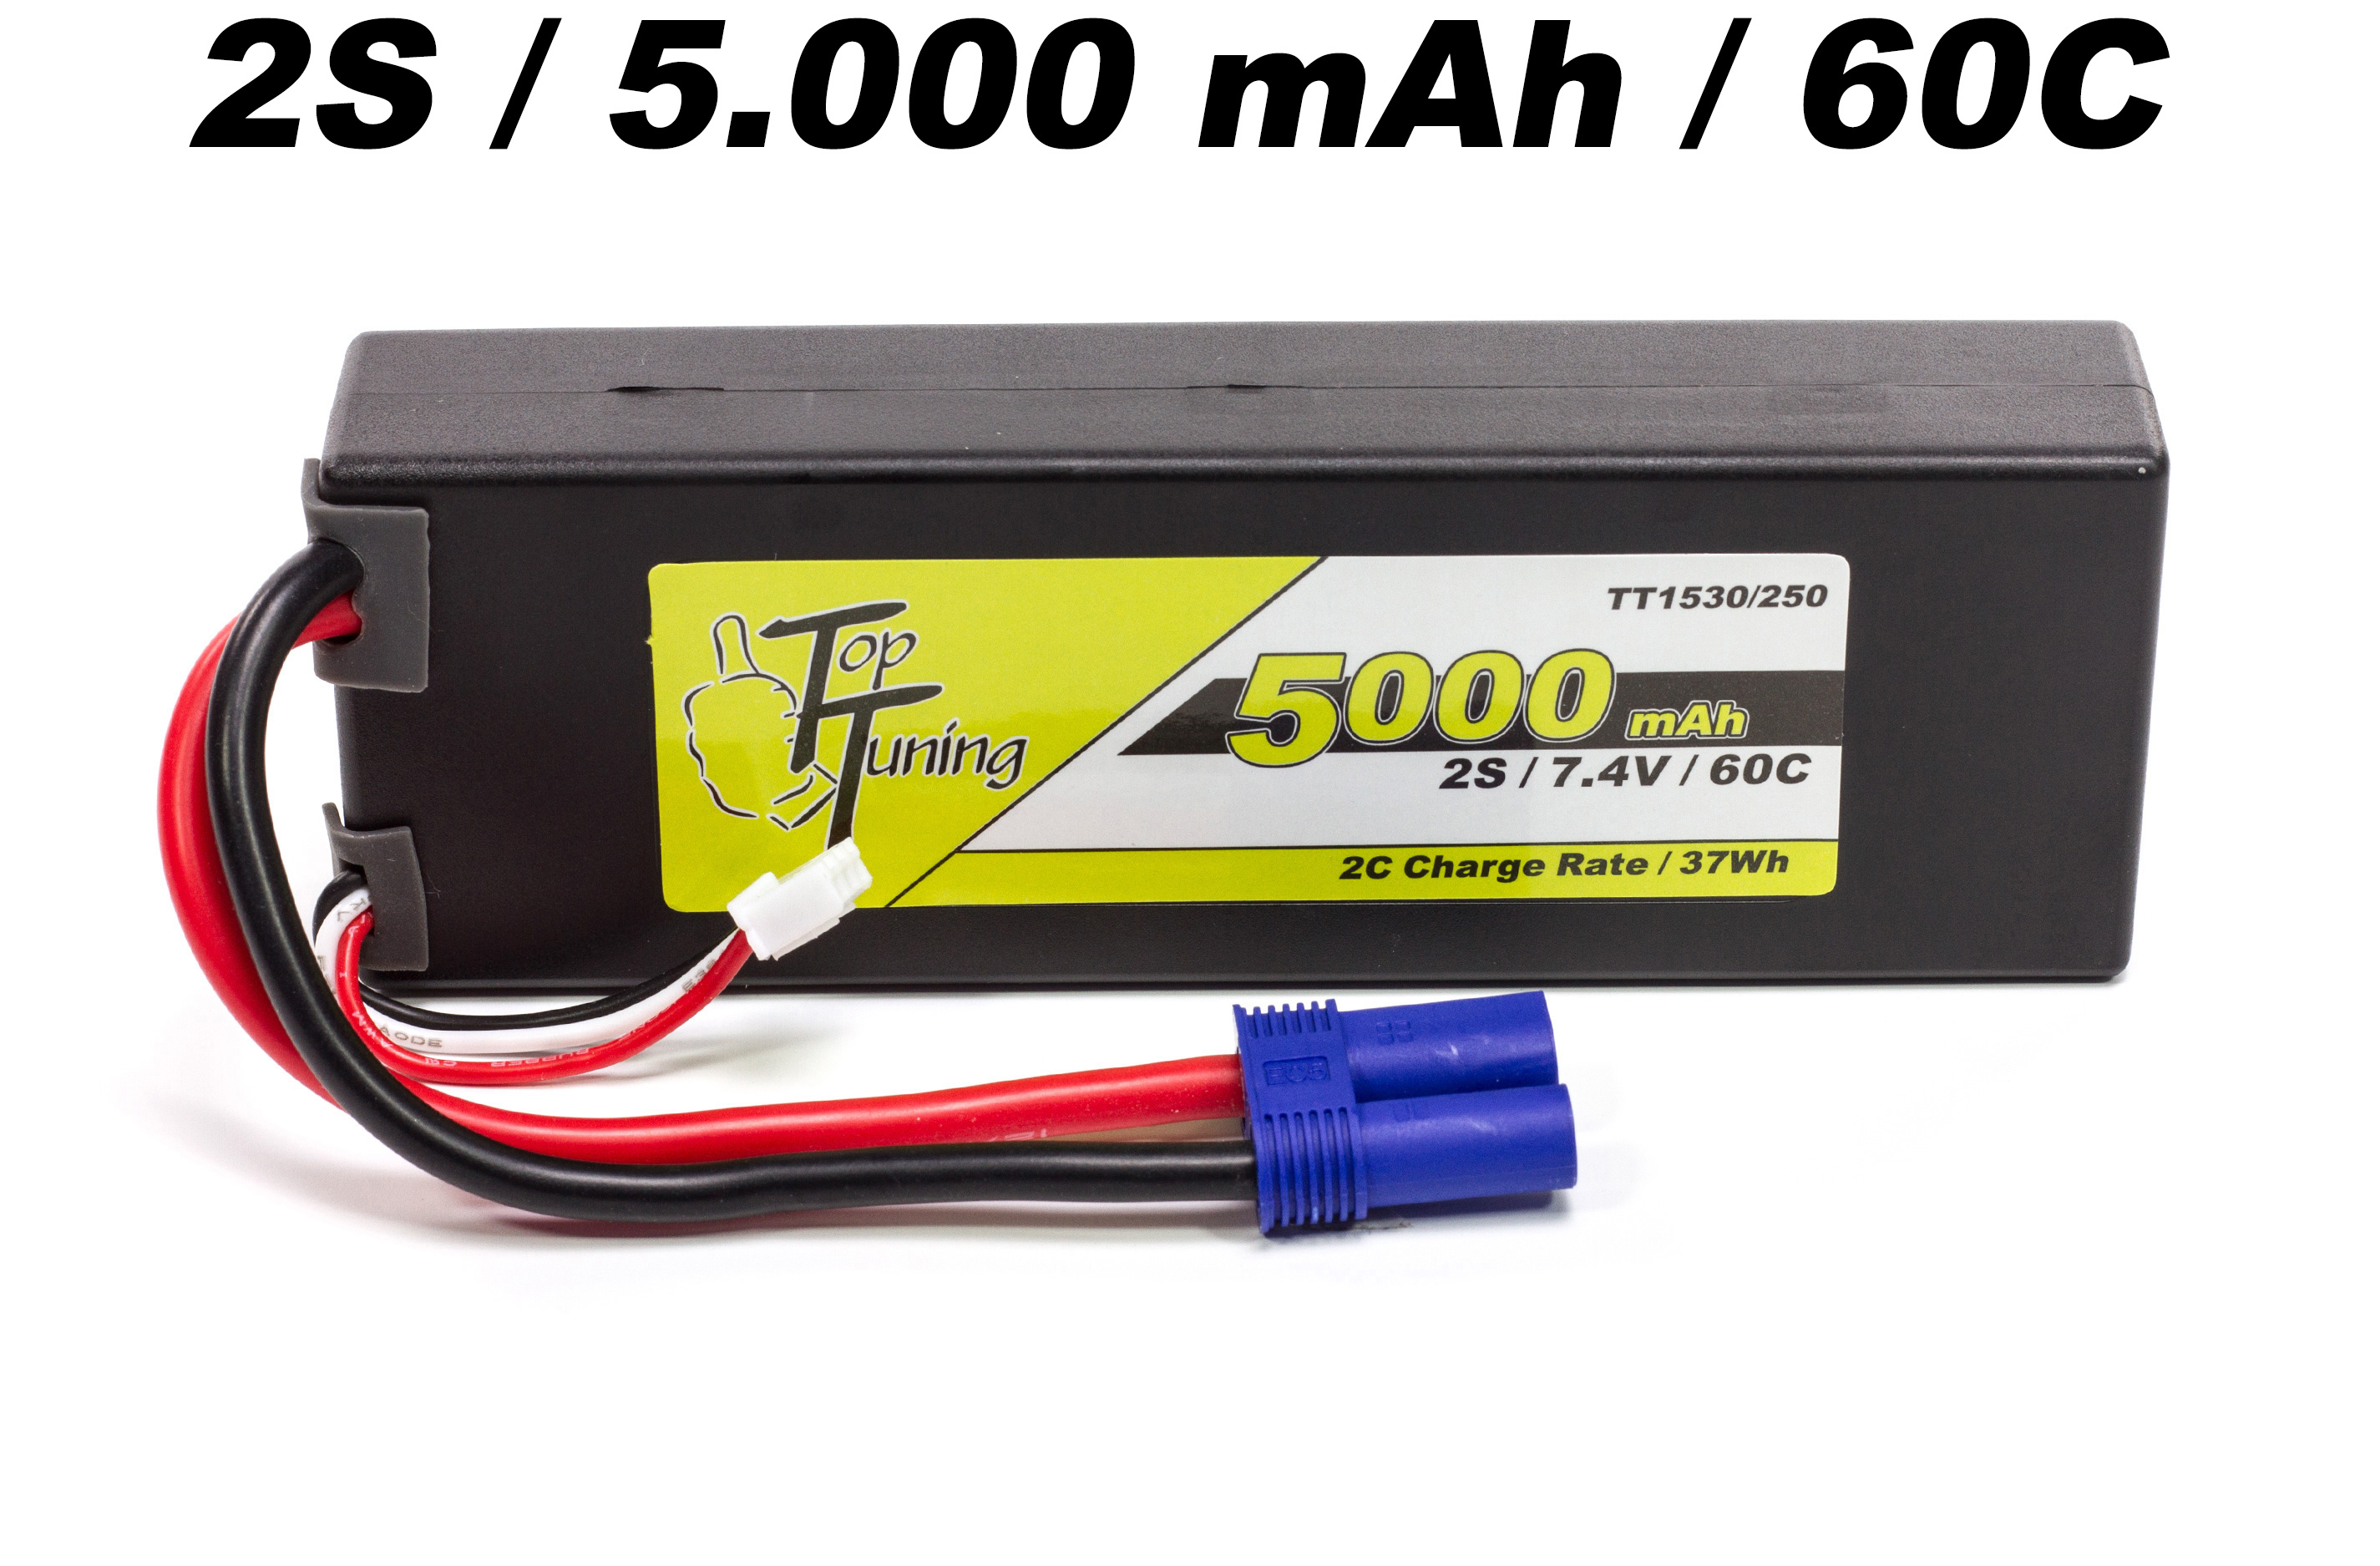 TT1530/250 Top Tuning 5000 mAh LiPo battery 2S, 7,4V 60C